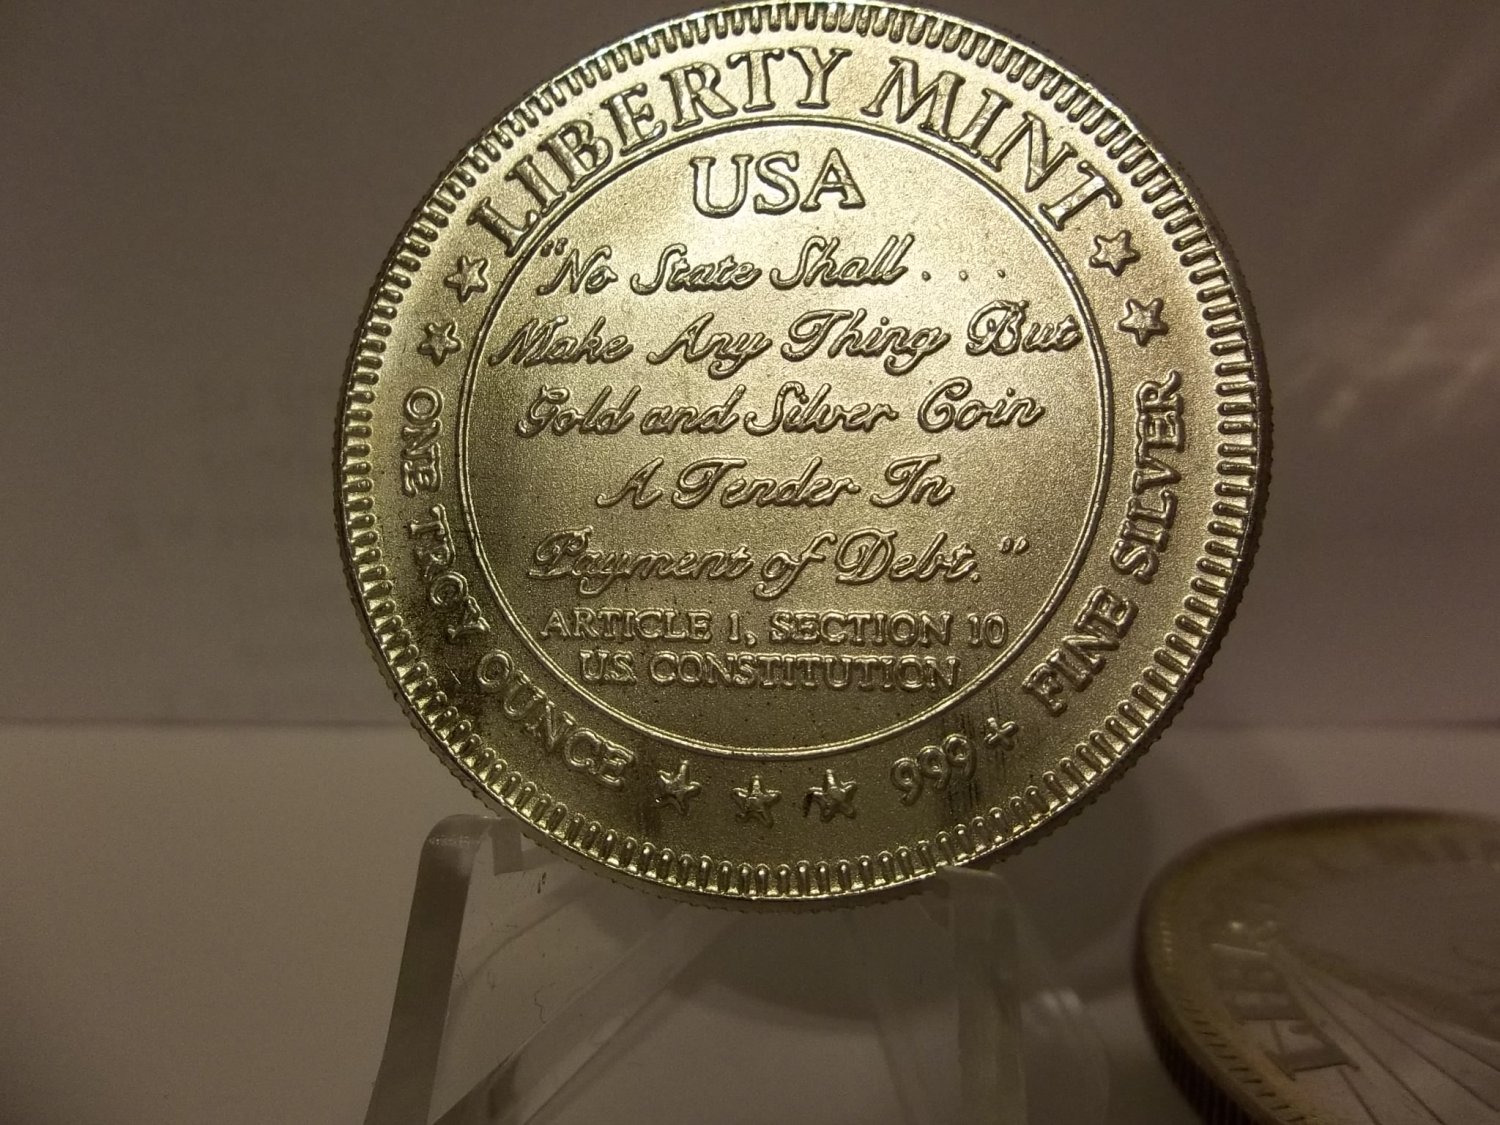 1985 Liberty Mint Silver Coins .999 Fine Silver 1 troy ounce Bullion.